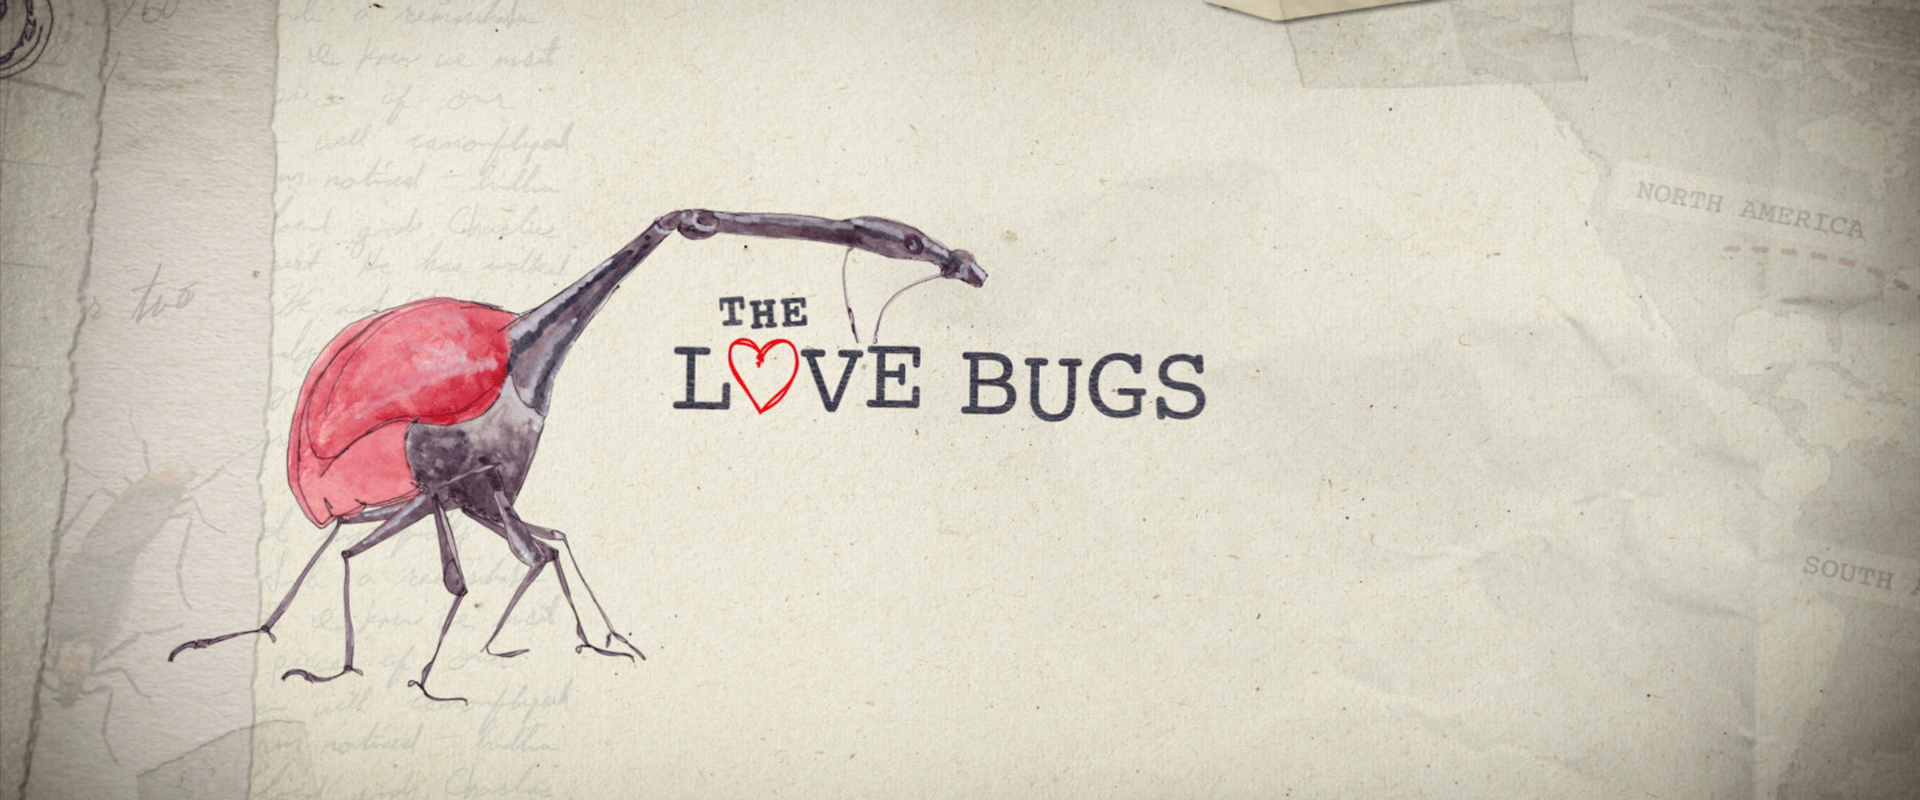 The Love Bugs | Mass FX Media